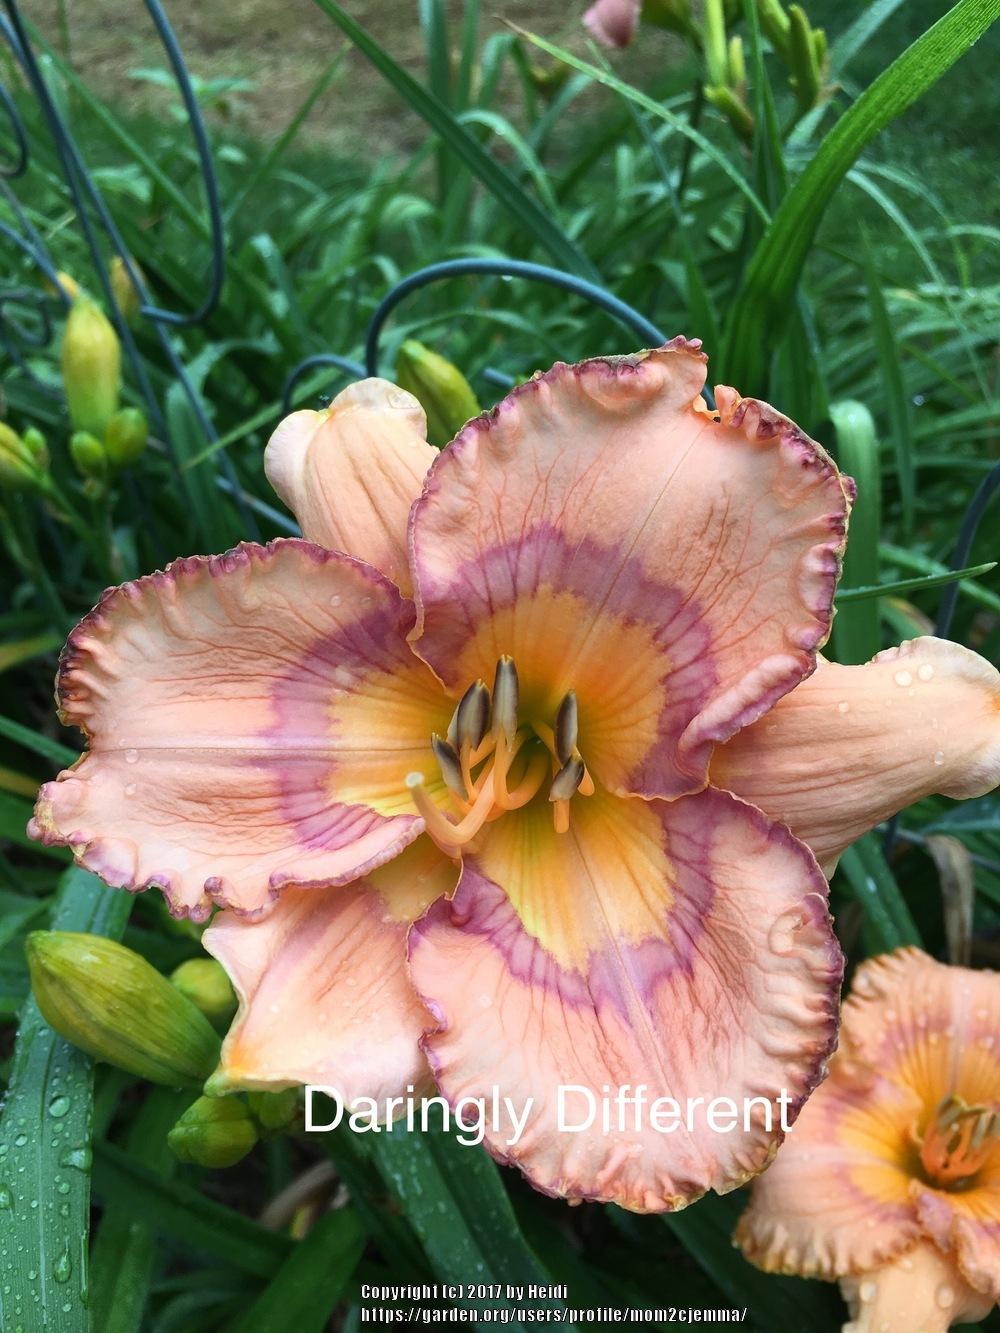 Photo of Daylily (Hemerocallis 'Daringly Different') uploaded by mom2cjemma